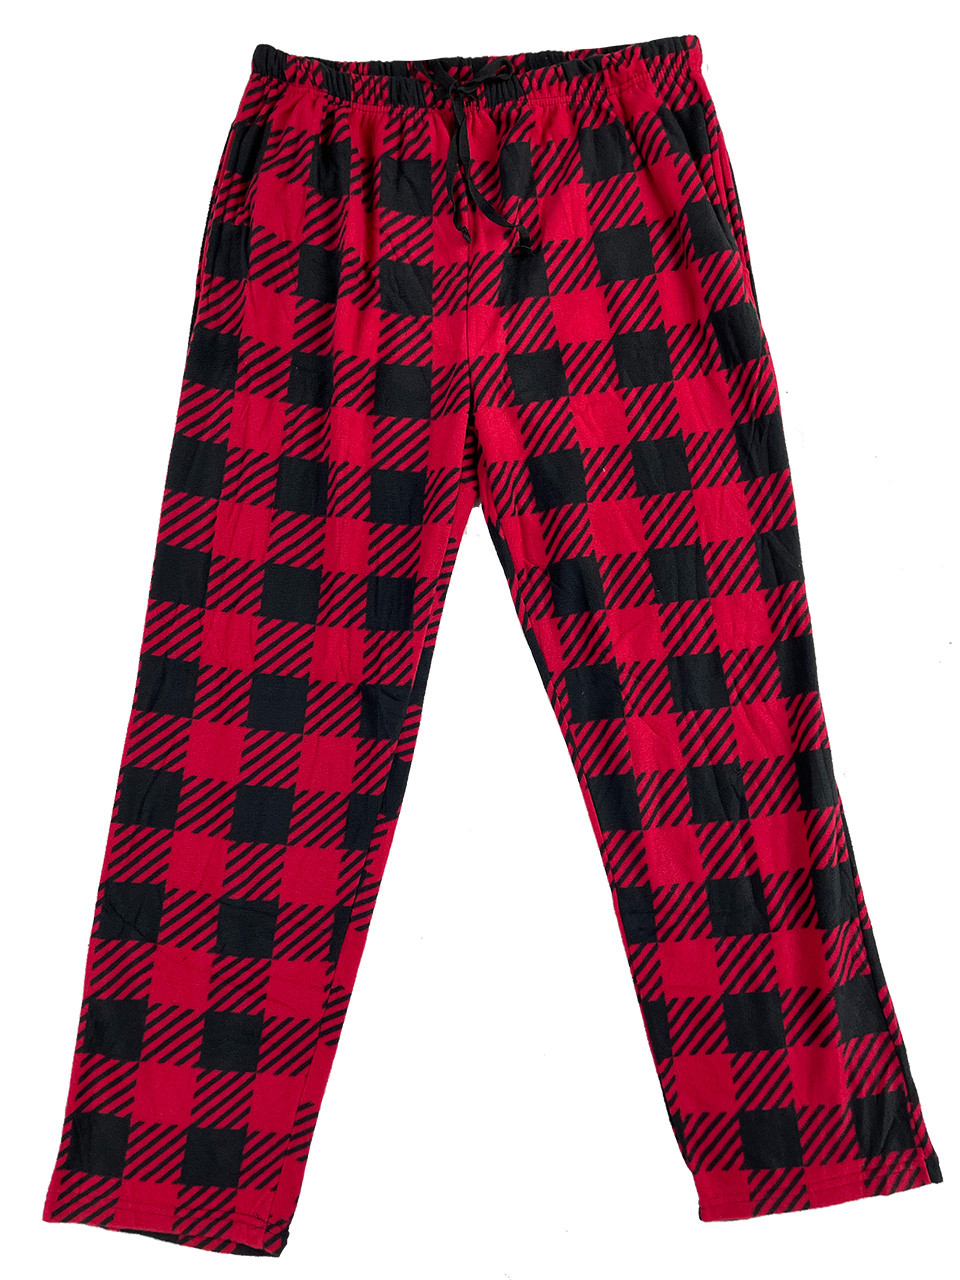 Wholesale Men's Flannel Pajama Bottoms Assorted Colors & Sizes